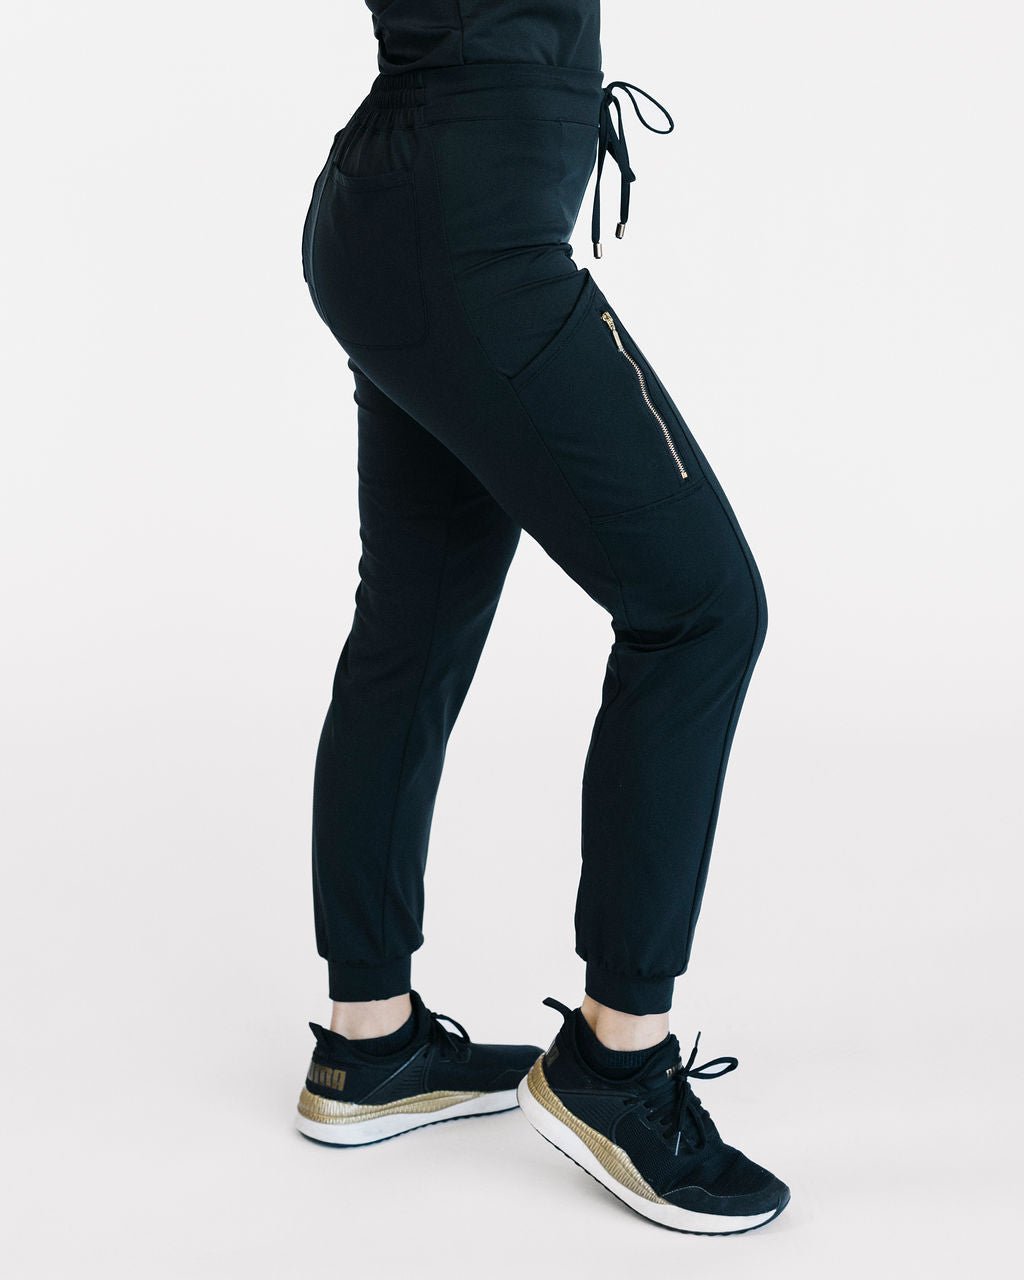 Women's Black Joggers & Sweatpants